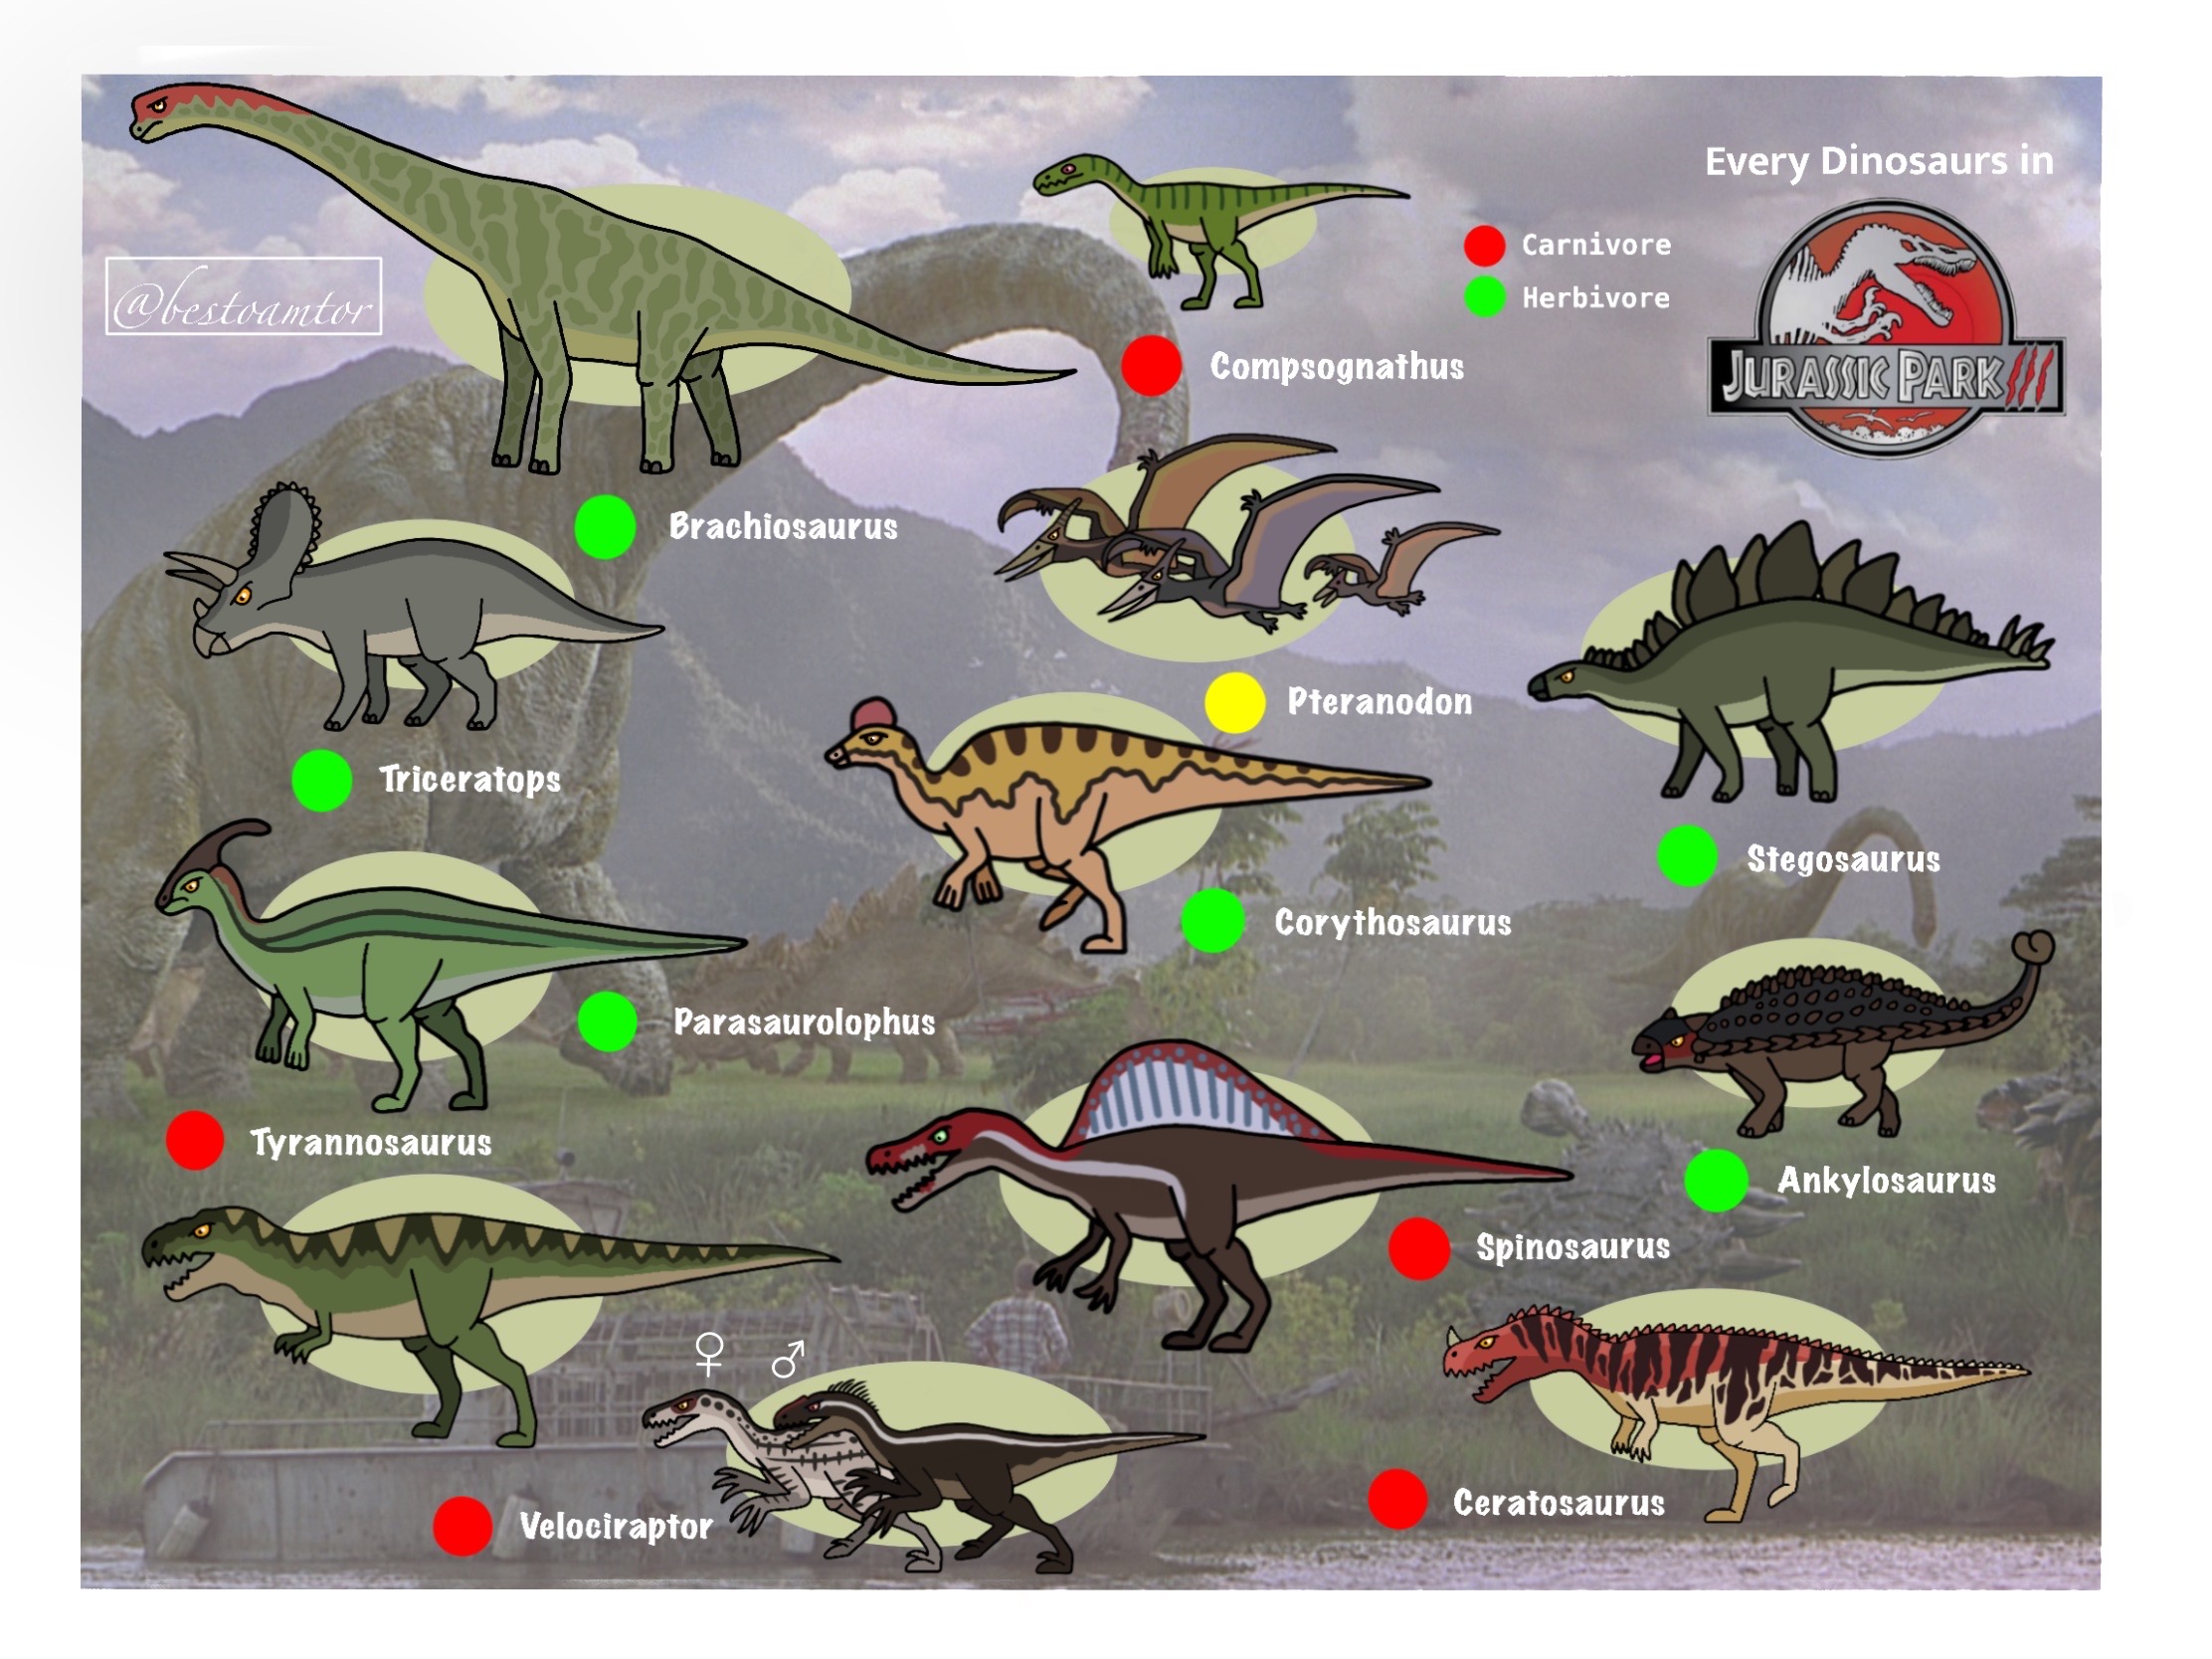 Every Dinosaurs In Jurassic Park 3 By Bestomator1111 On Deviantart 